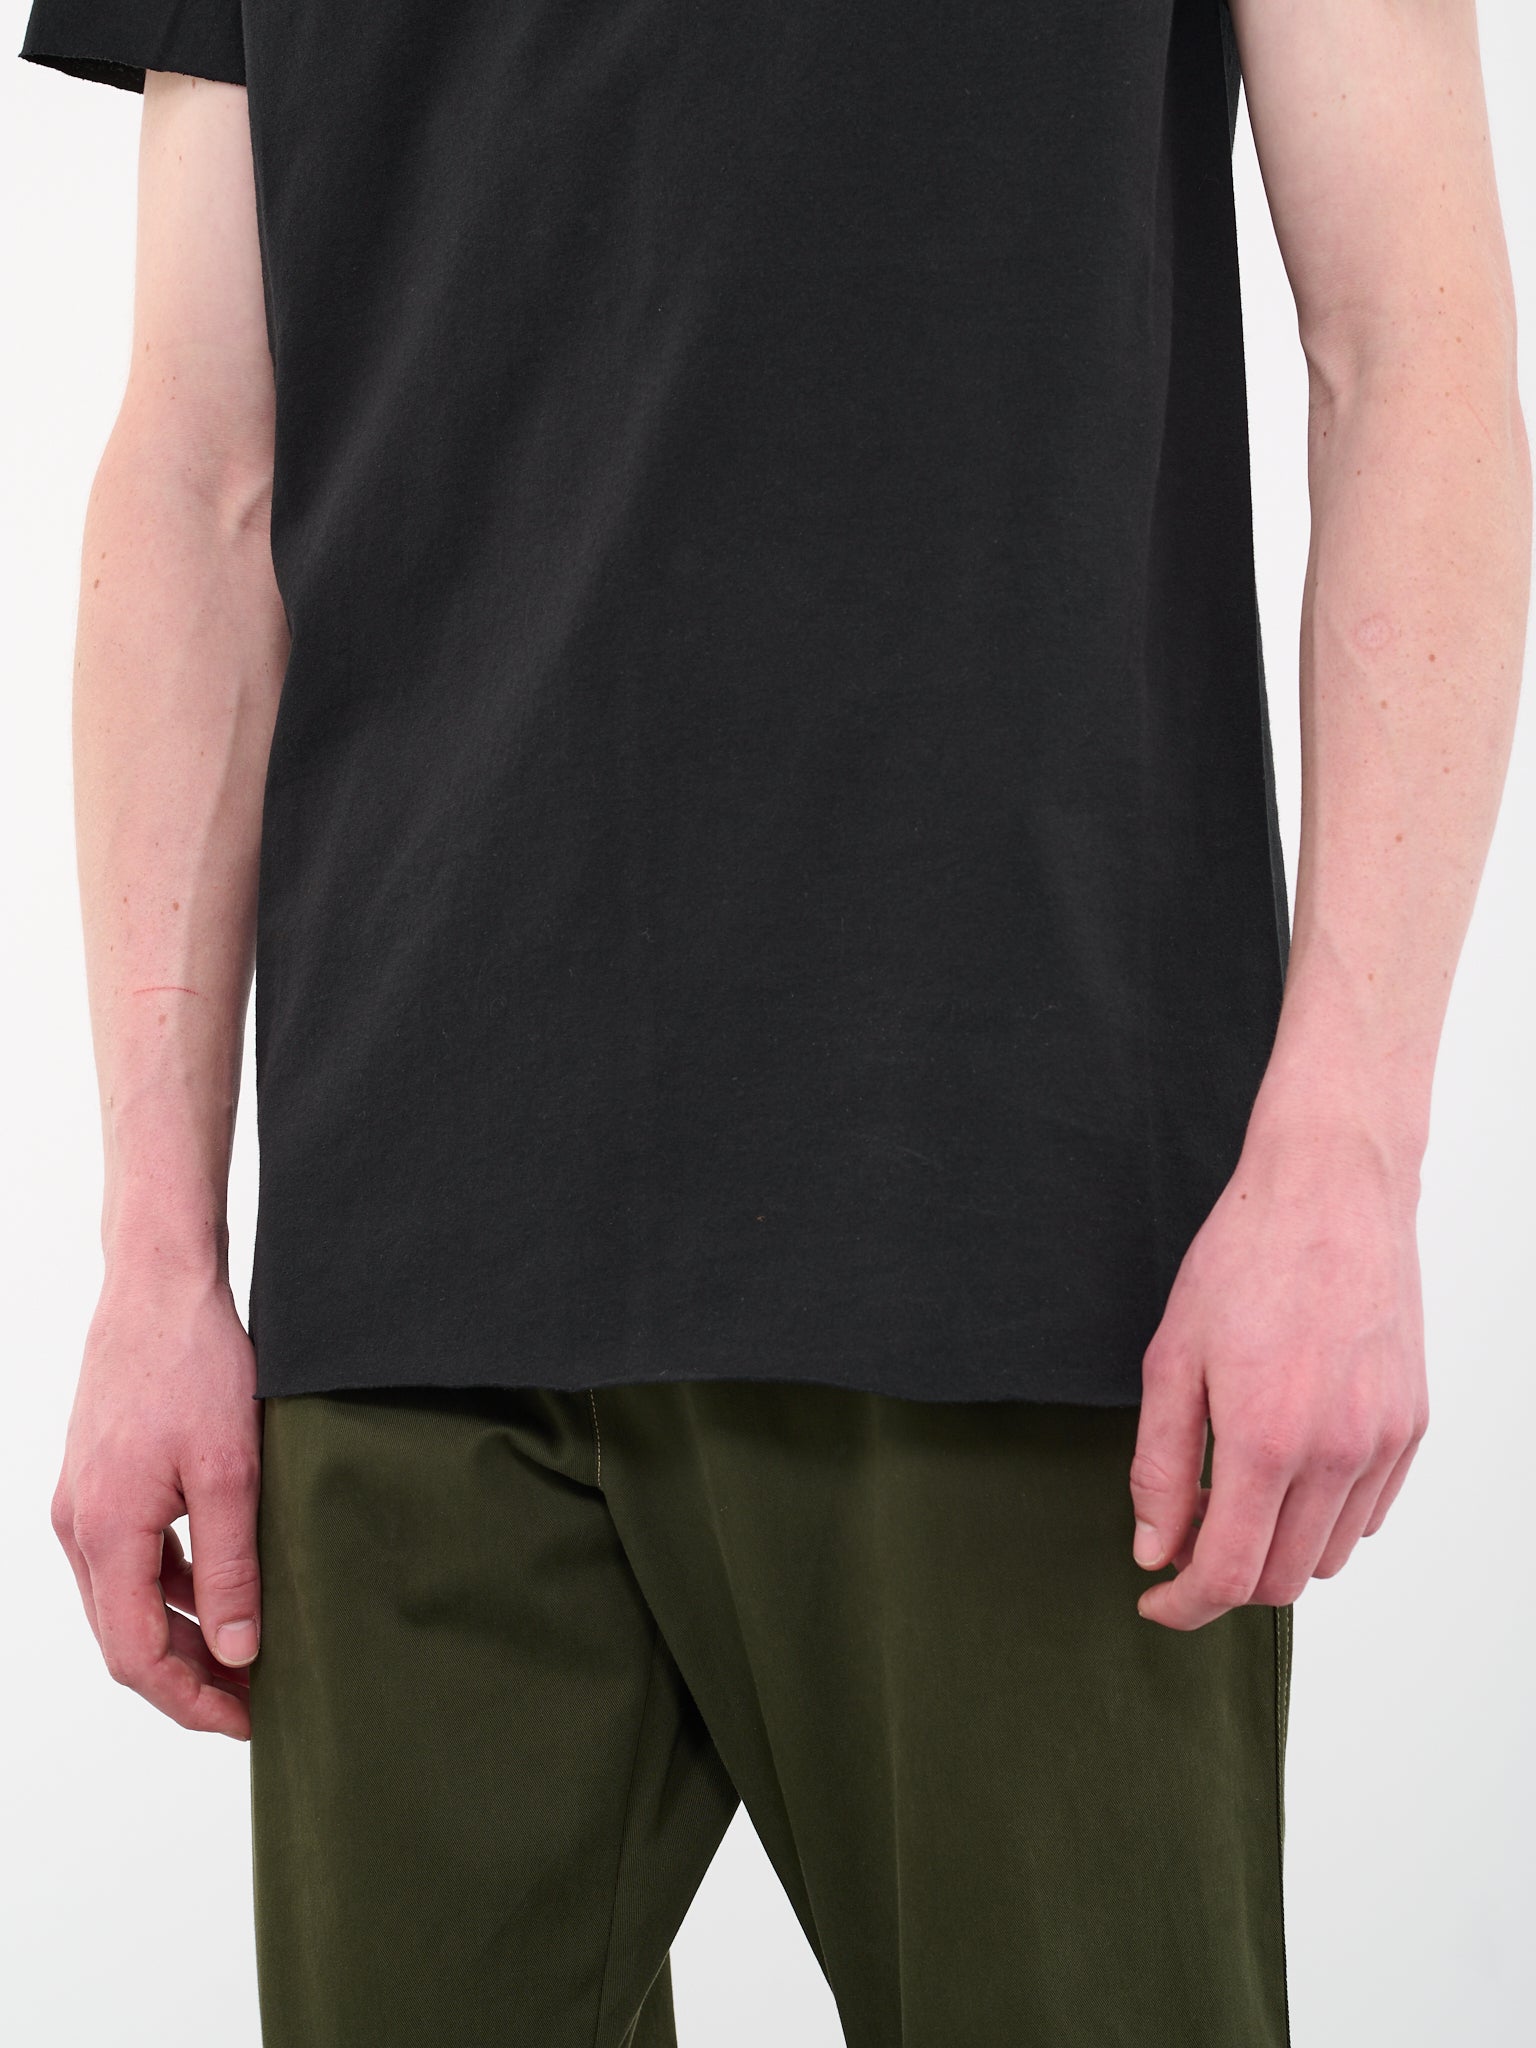 Slim T-Shirt (DDMTC0004-METEORITE)